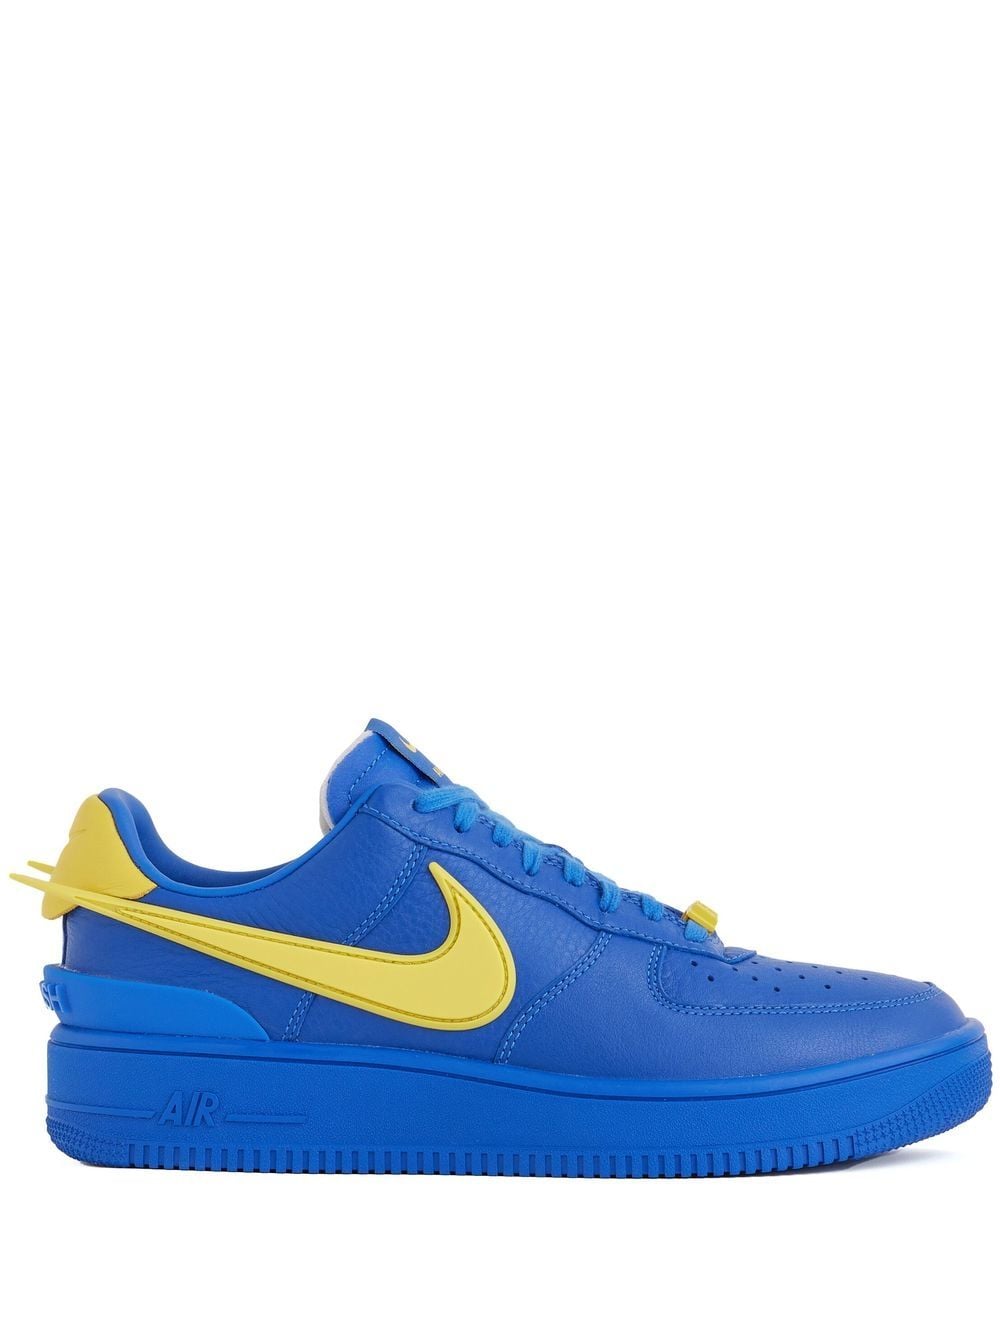 Nike X Ambush Air Force 1 Low Sp Sneakers In Blue